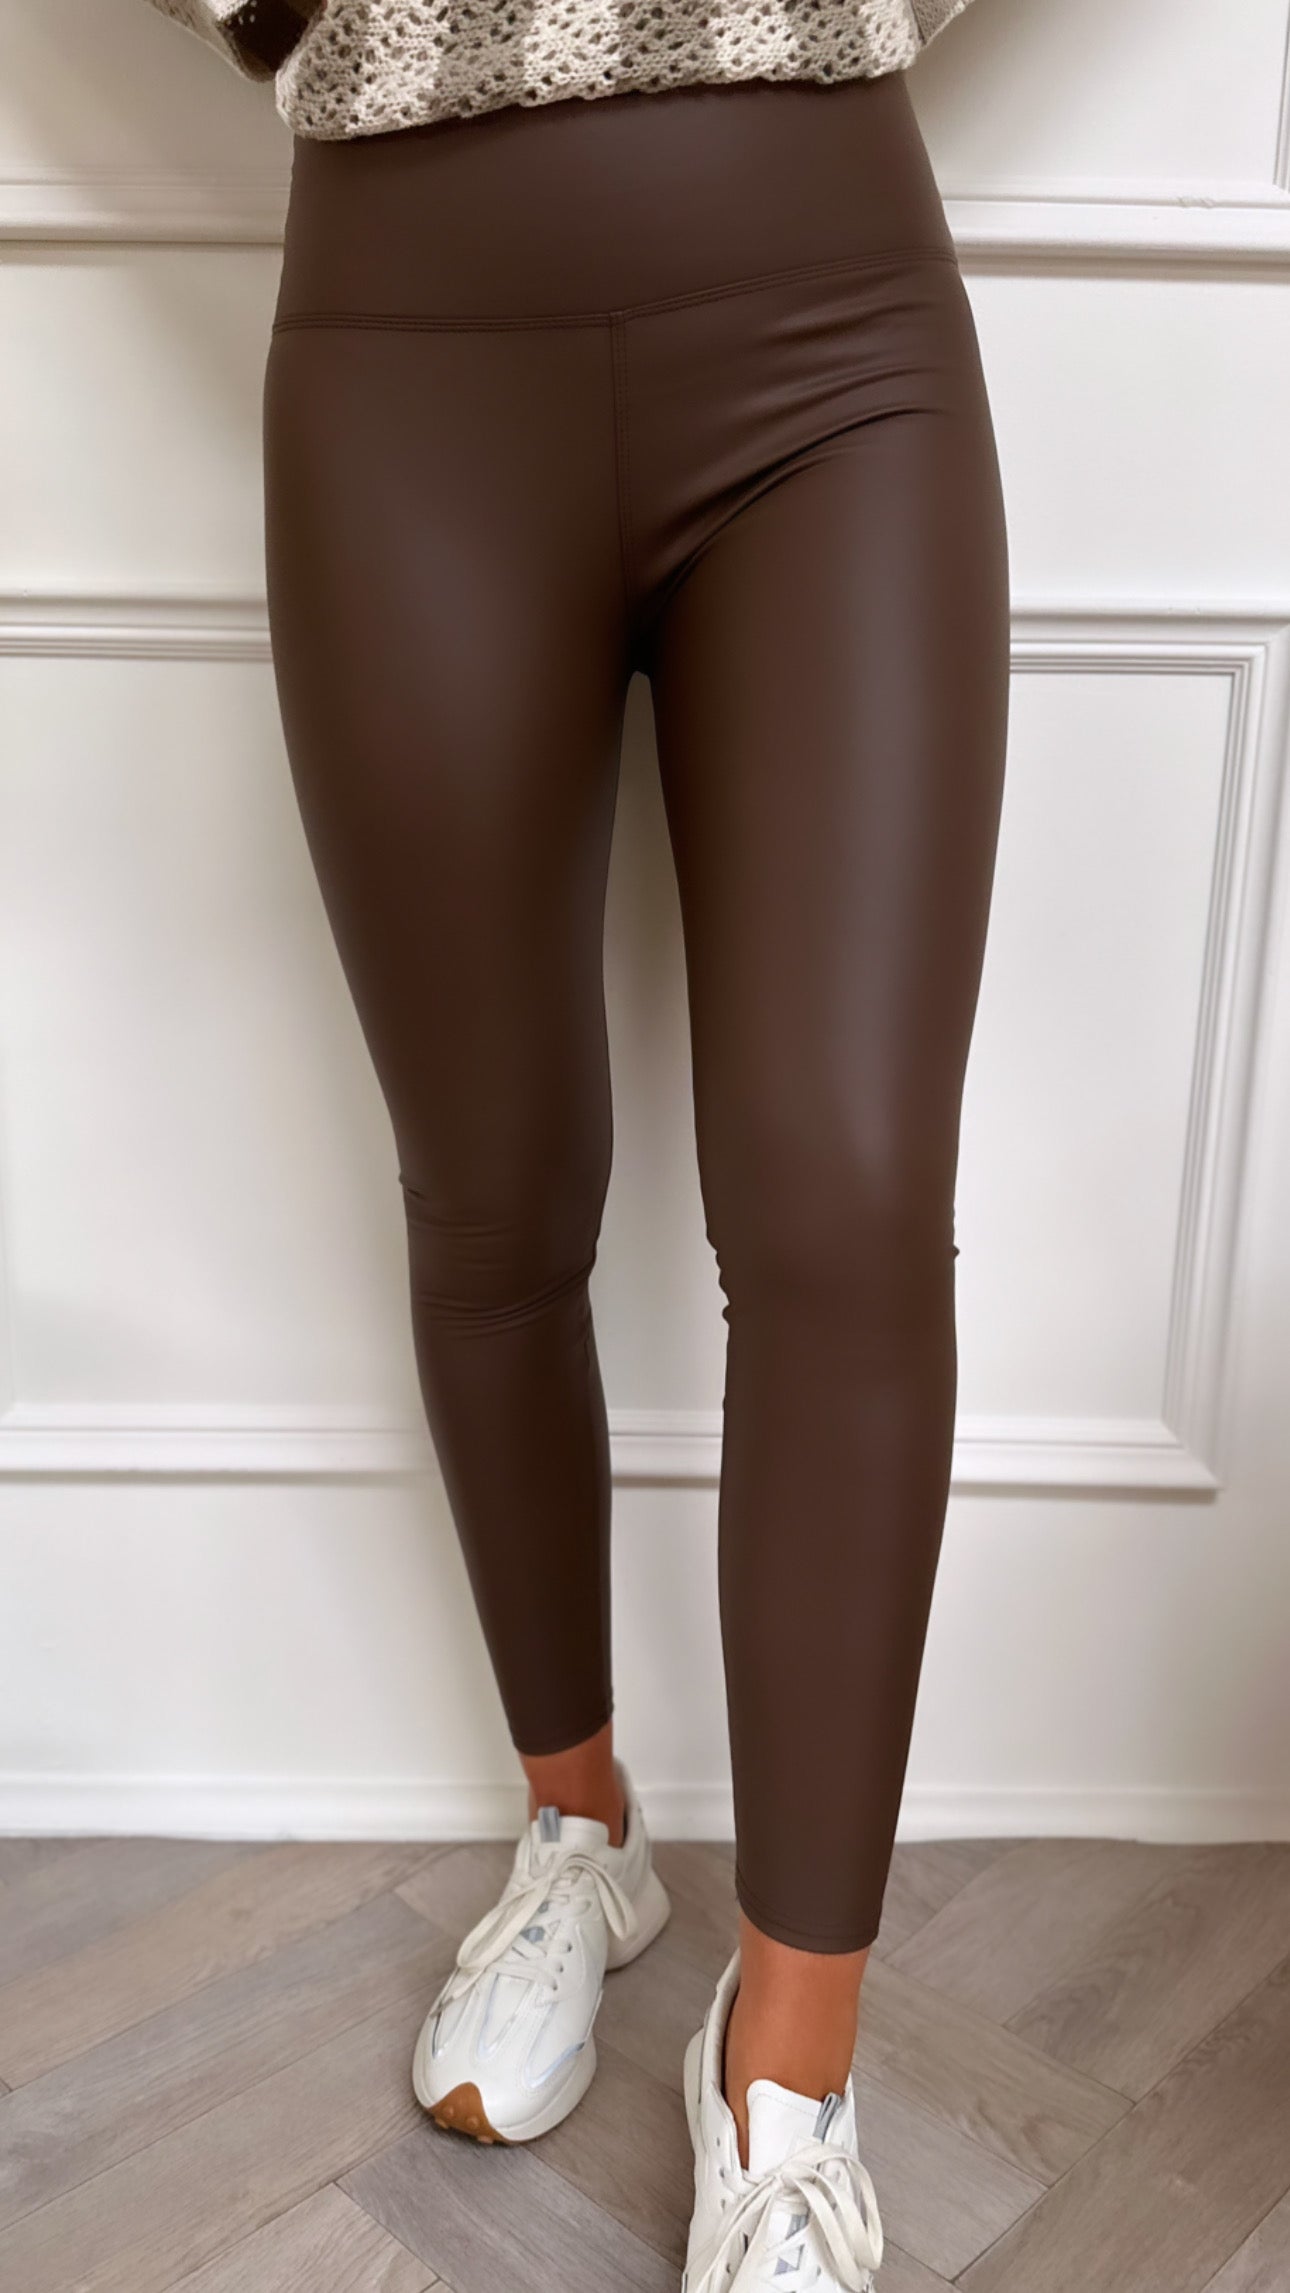 ARJOSA Women's Faux Leather Leggings High Waist Tights Skinny Pants, Dark  Brown, S : Amazon.co.uk: Fashion